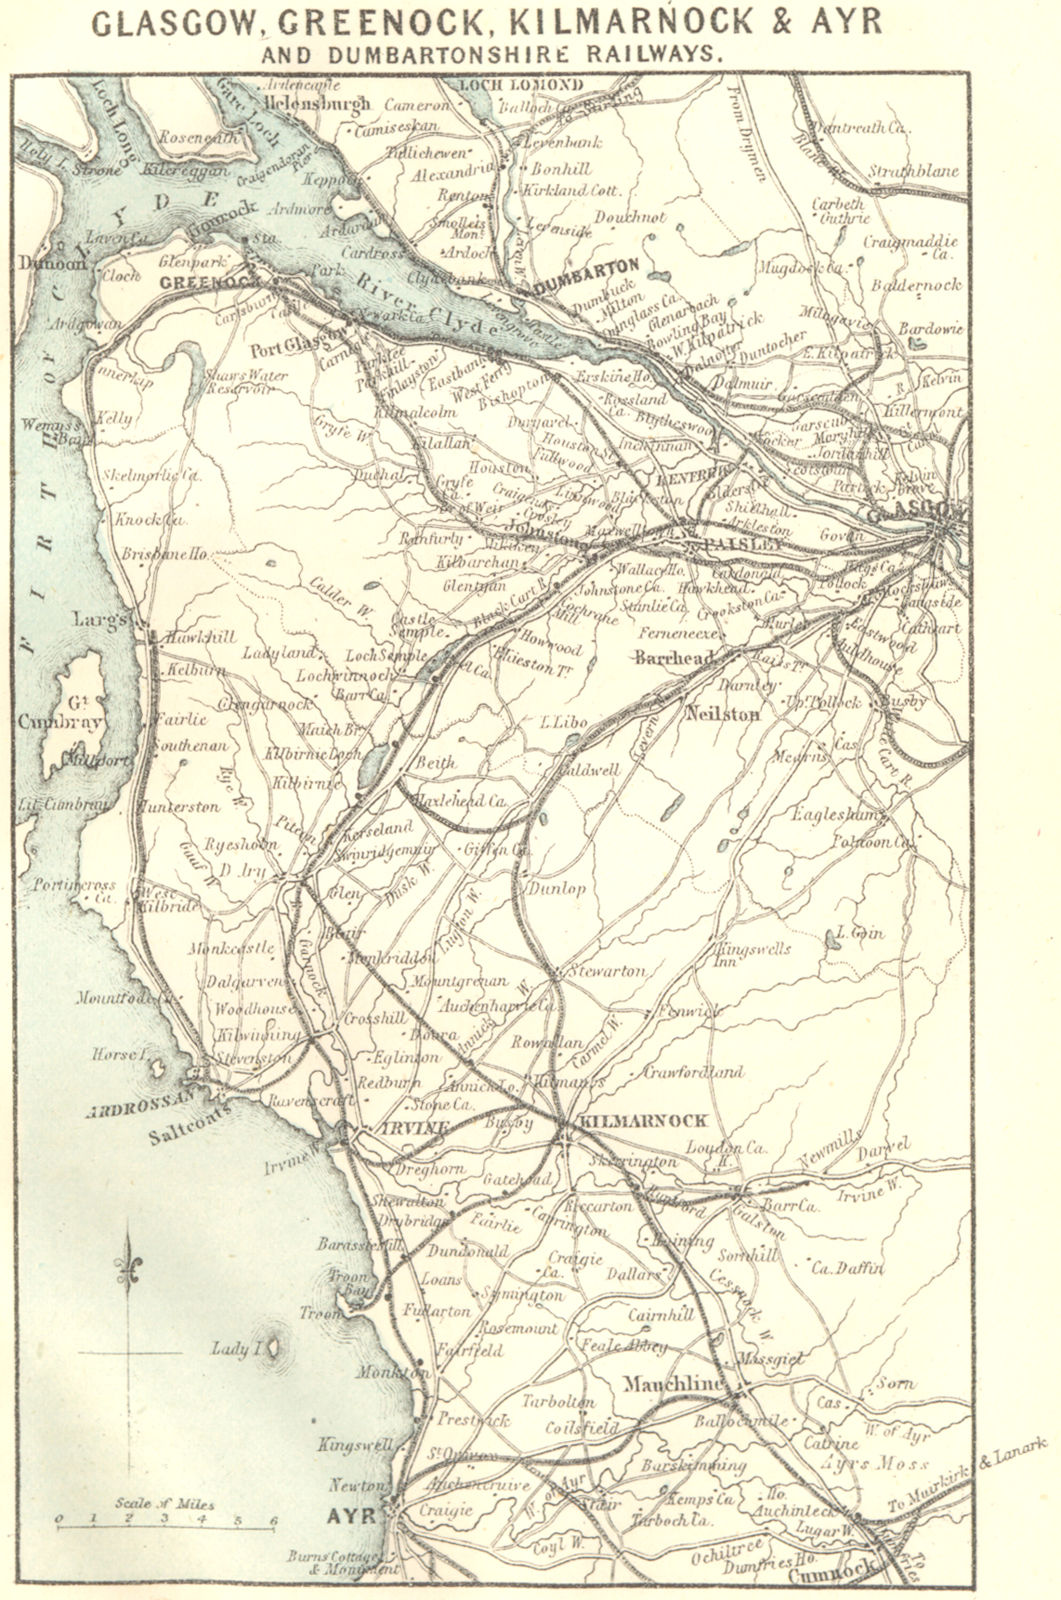 FIRTH OF CLYDE. Glasgow Greenock Kilmarnock Ayr Dumbartonshire Railway 1887 map